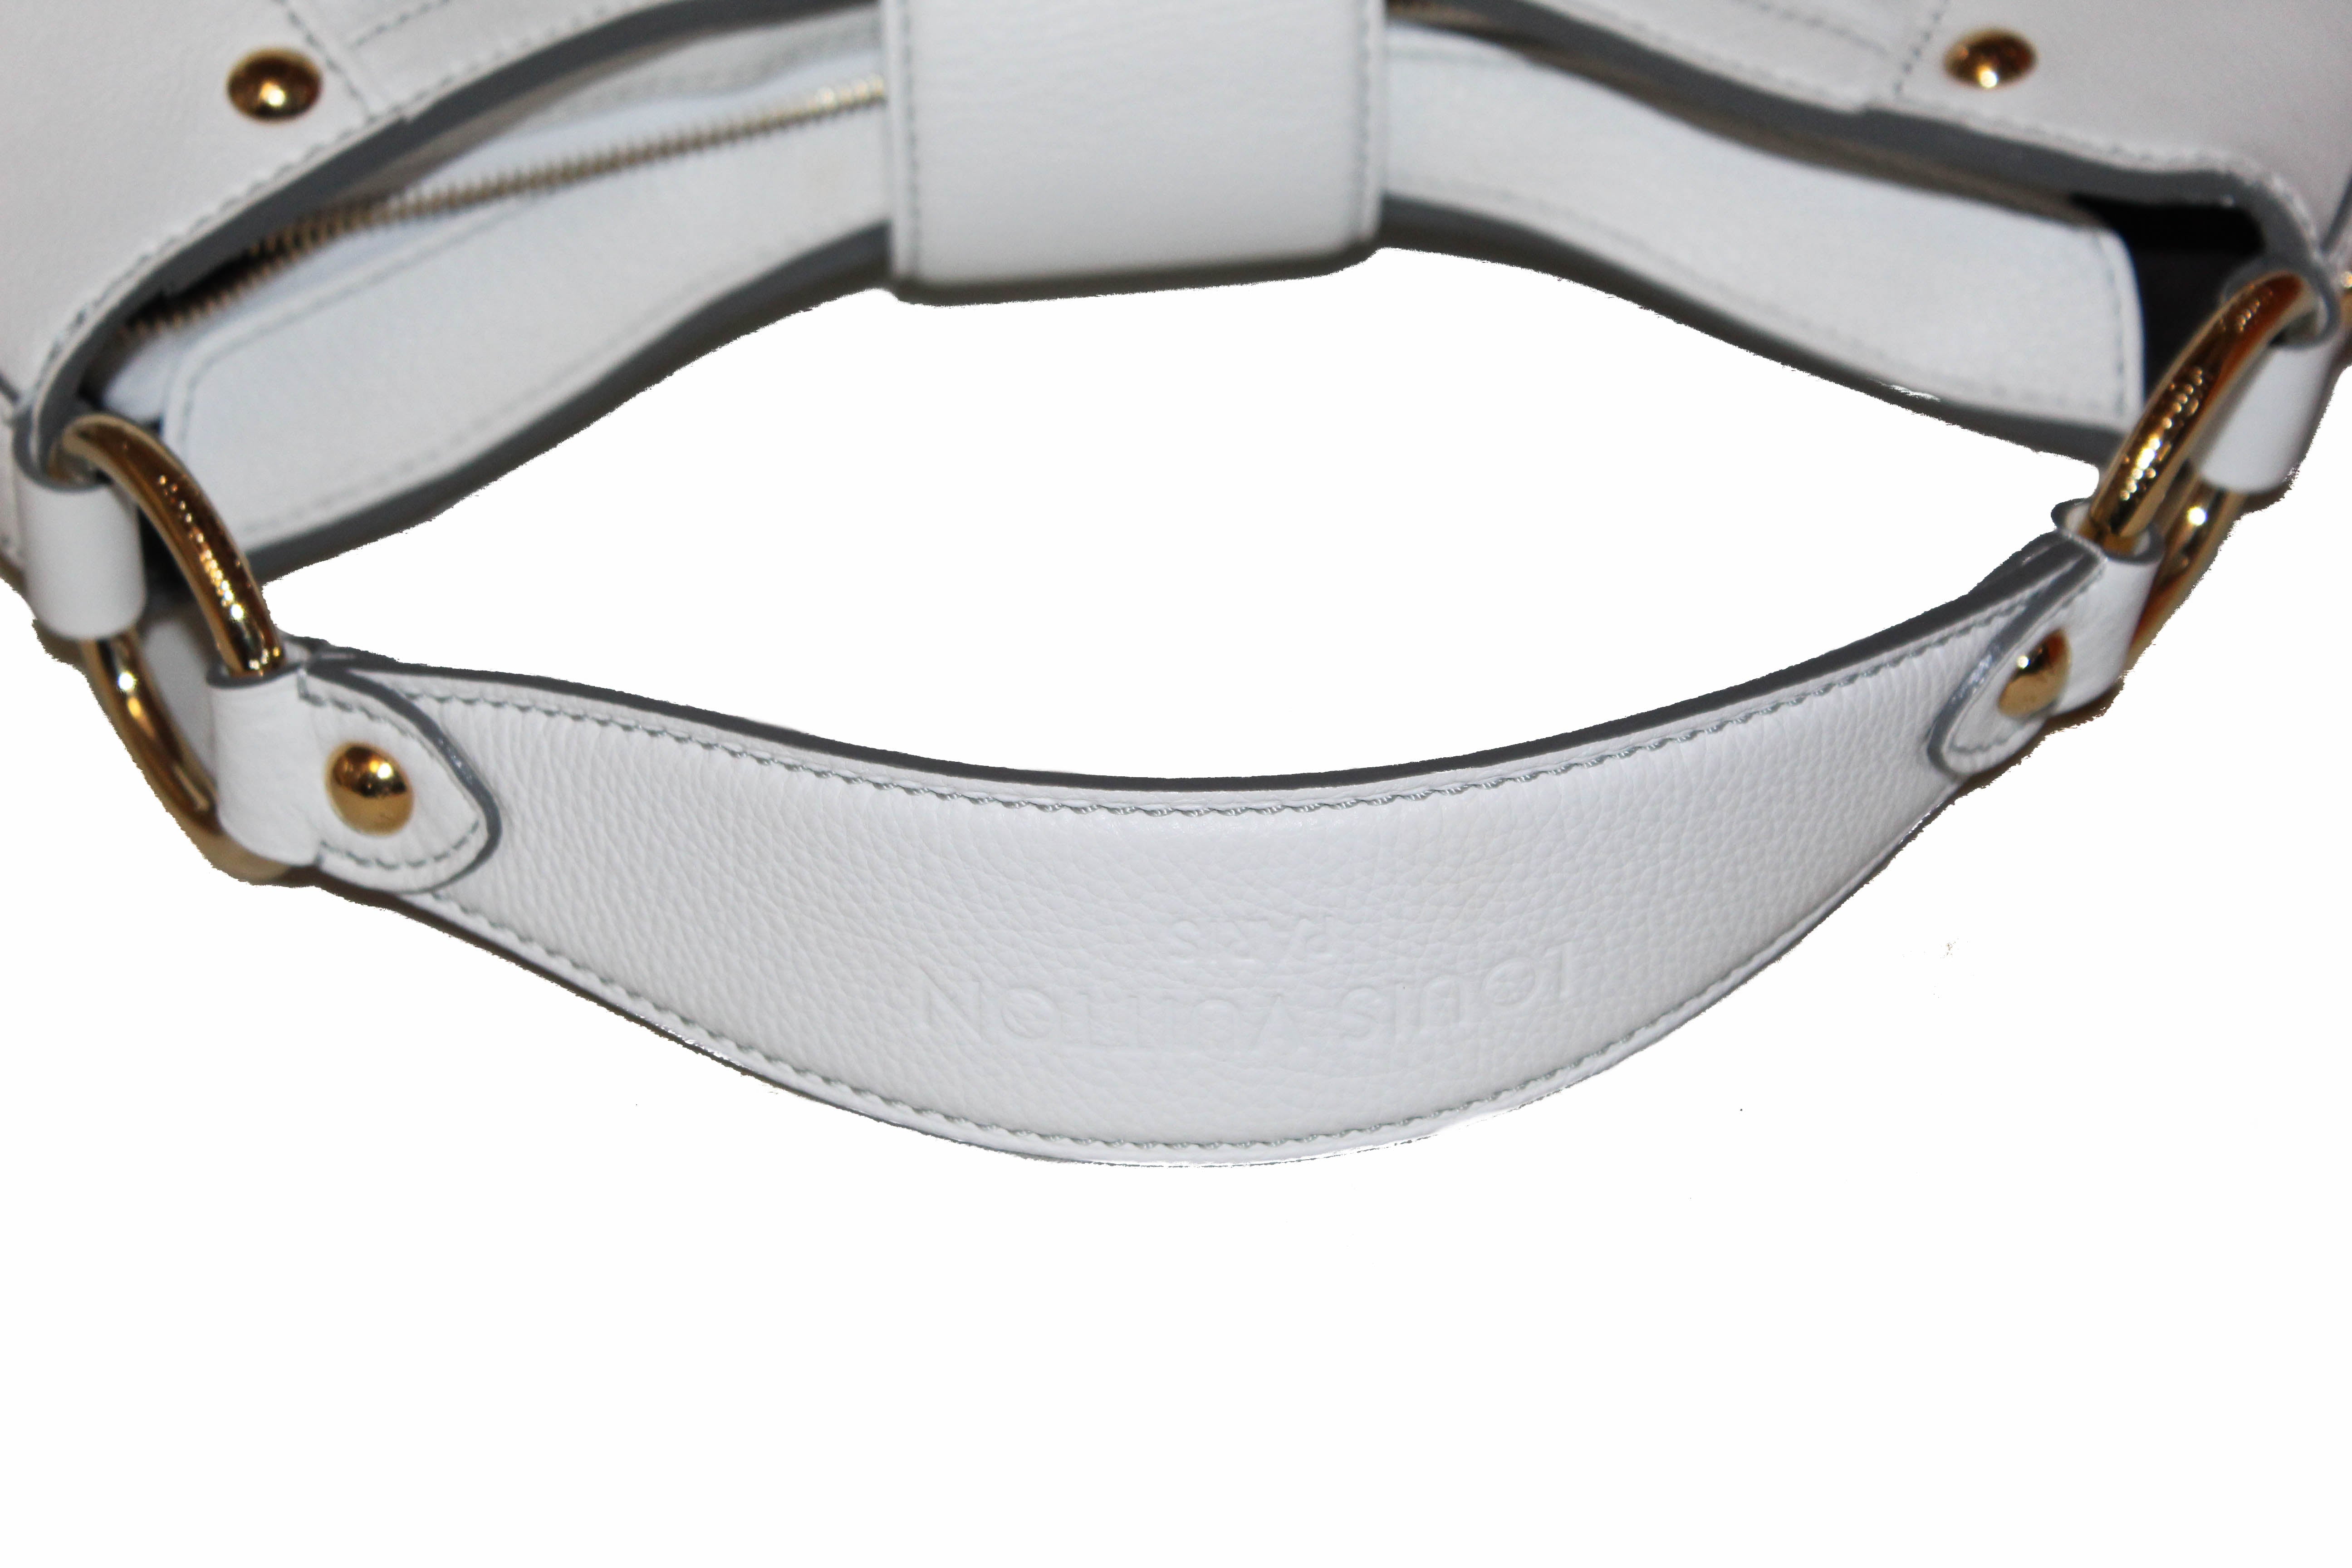 Louis Vuitton White Mahina Perforated Leather Solar PM Hobo Bag 241492